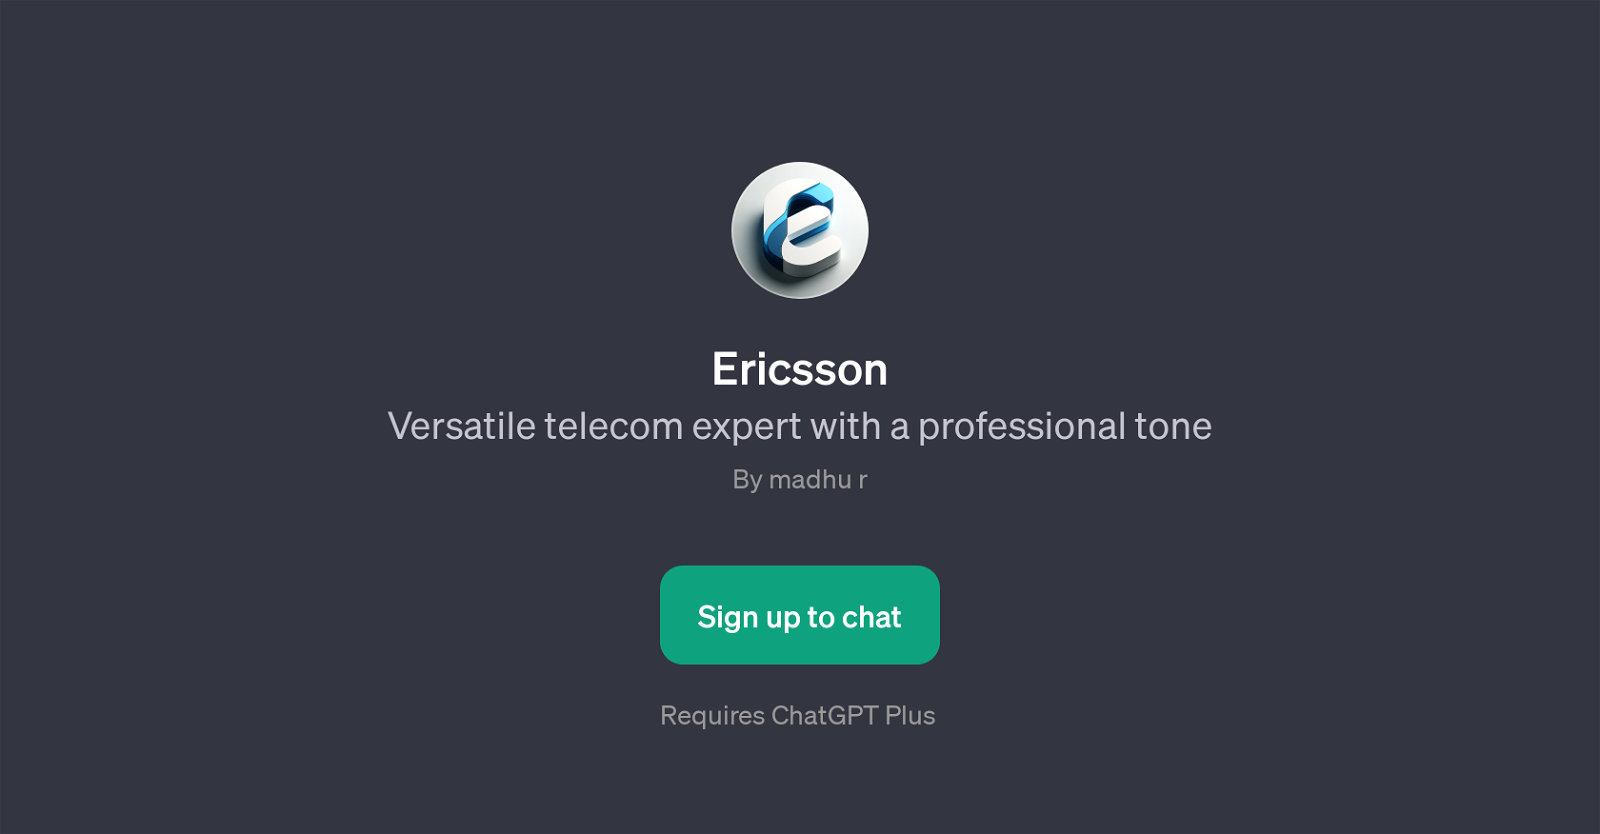 Ericsson website